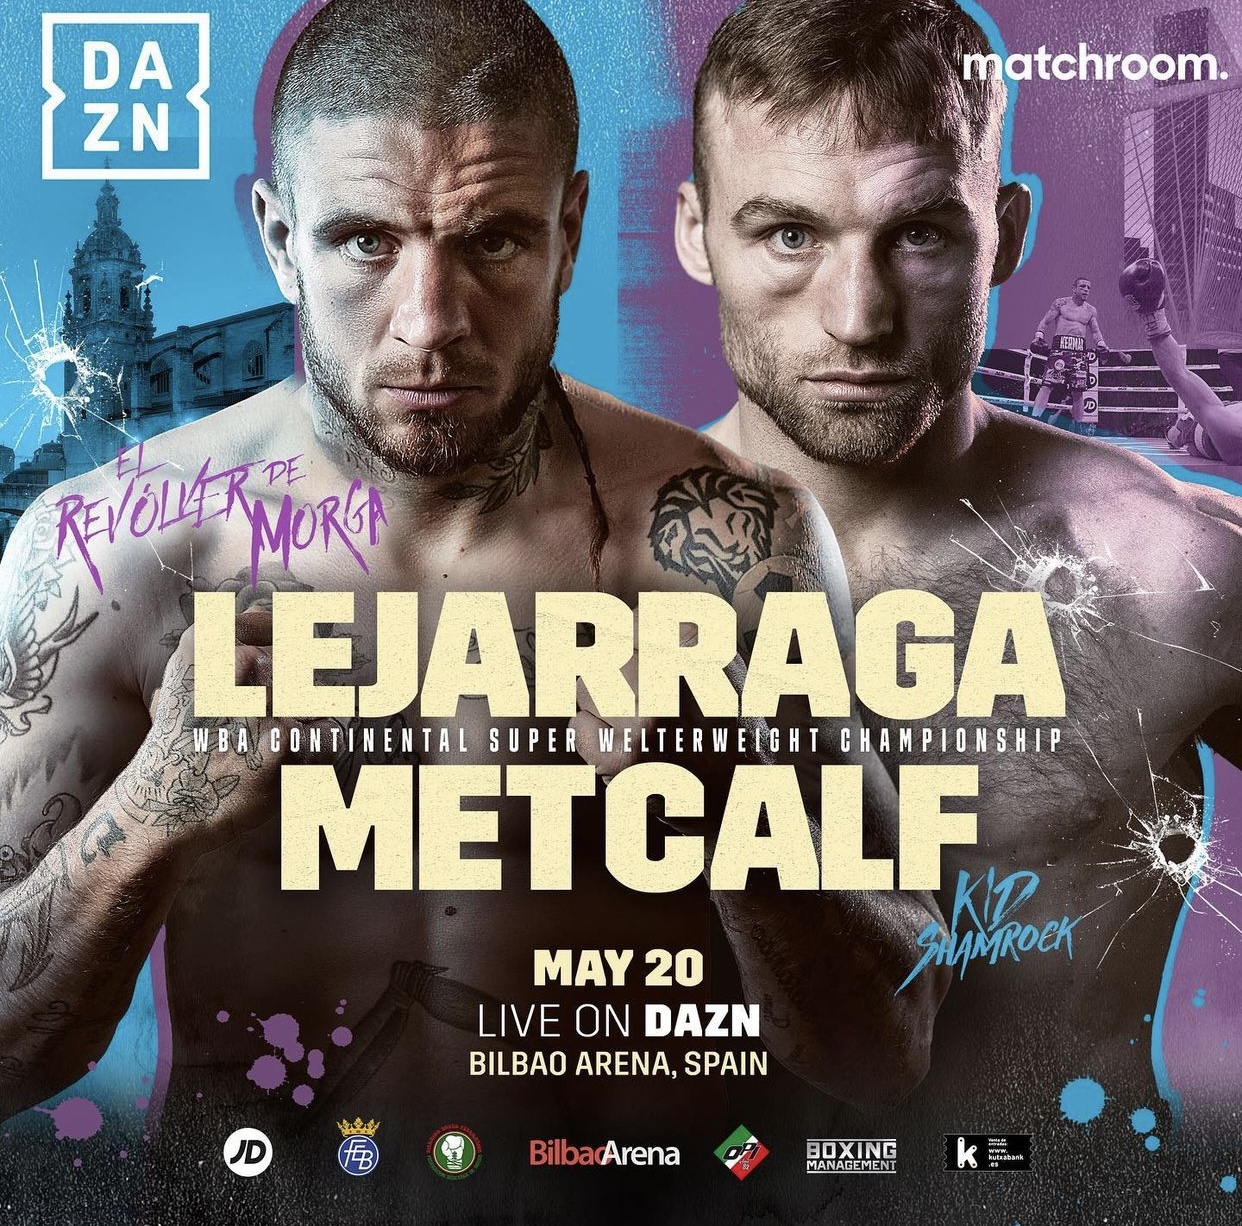 Bilbao will heat up with Lejarraga-Metcalf for the WBA Continental belt